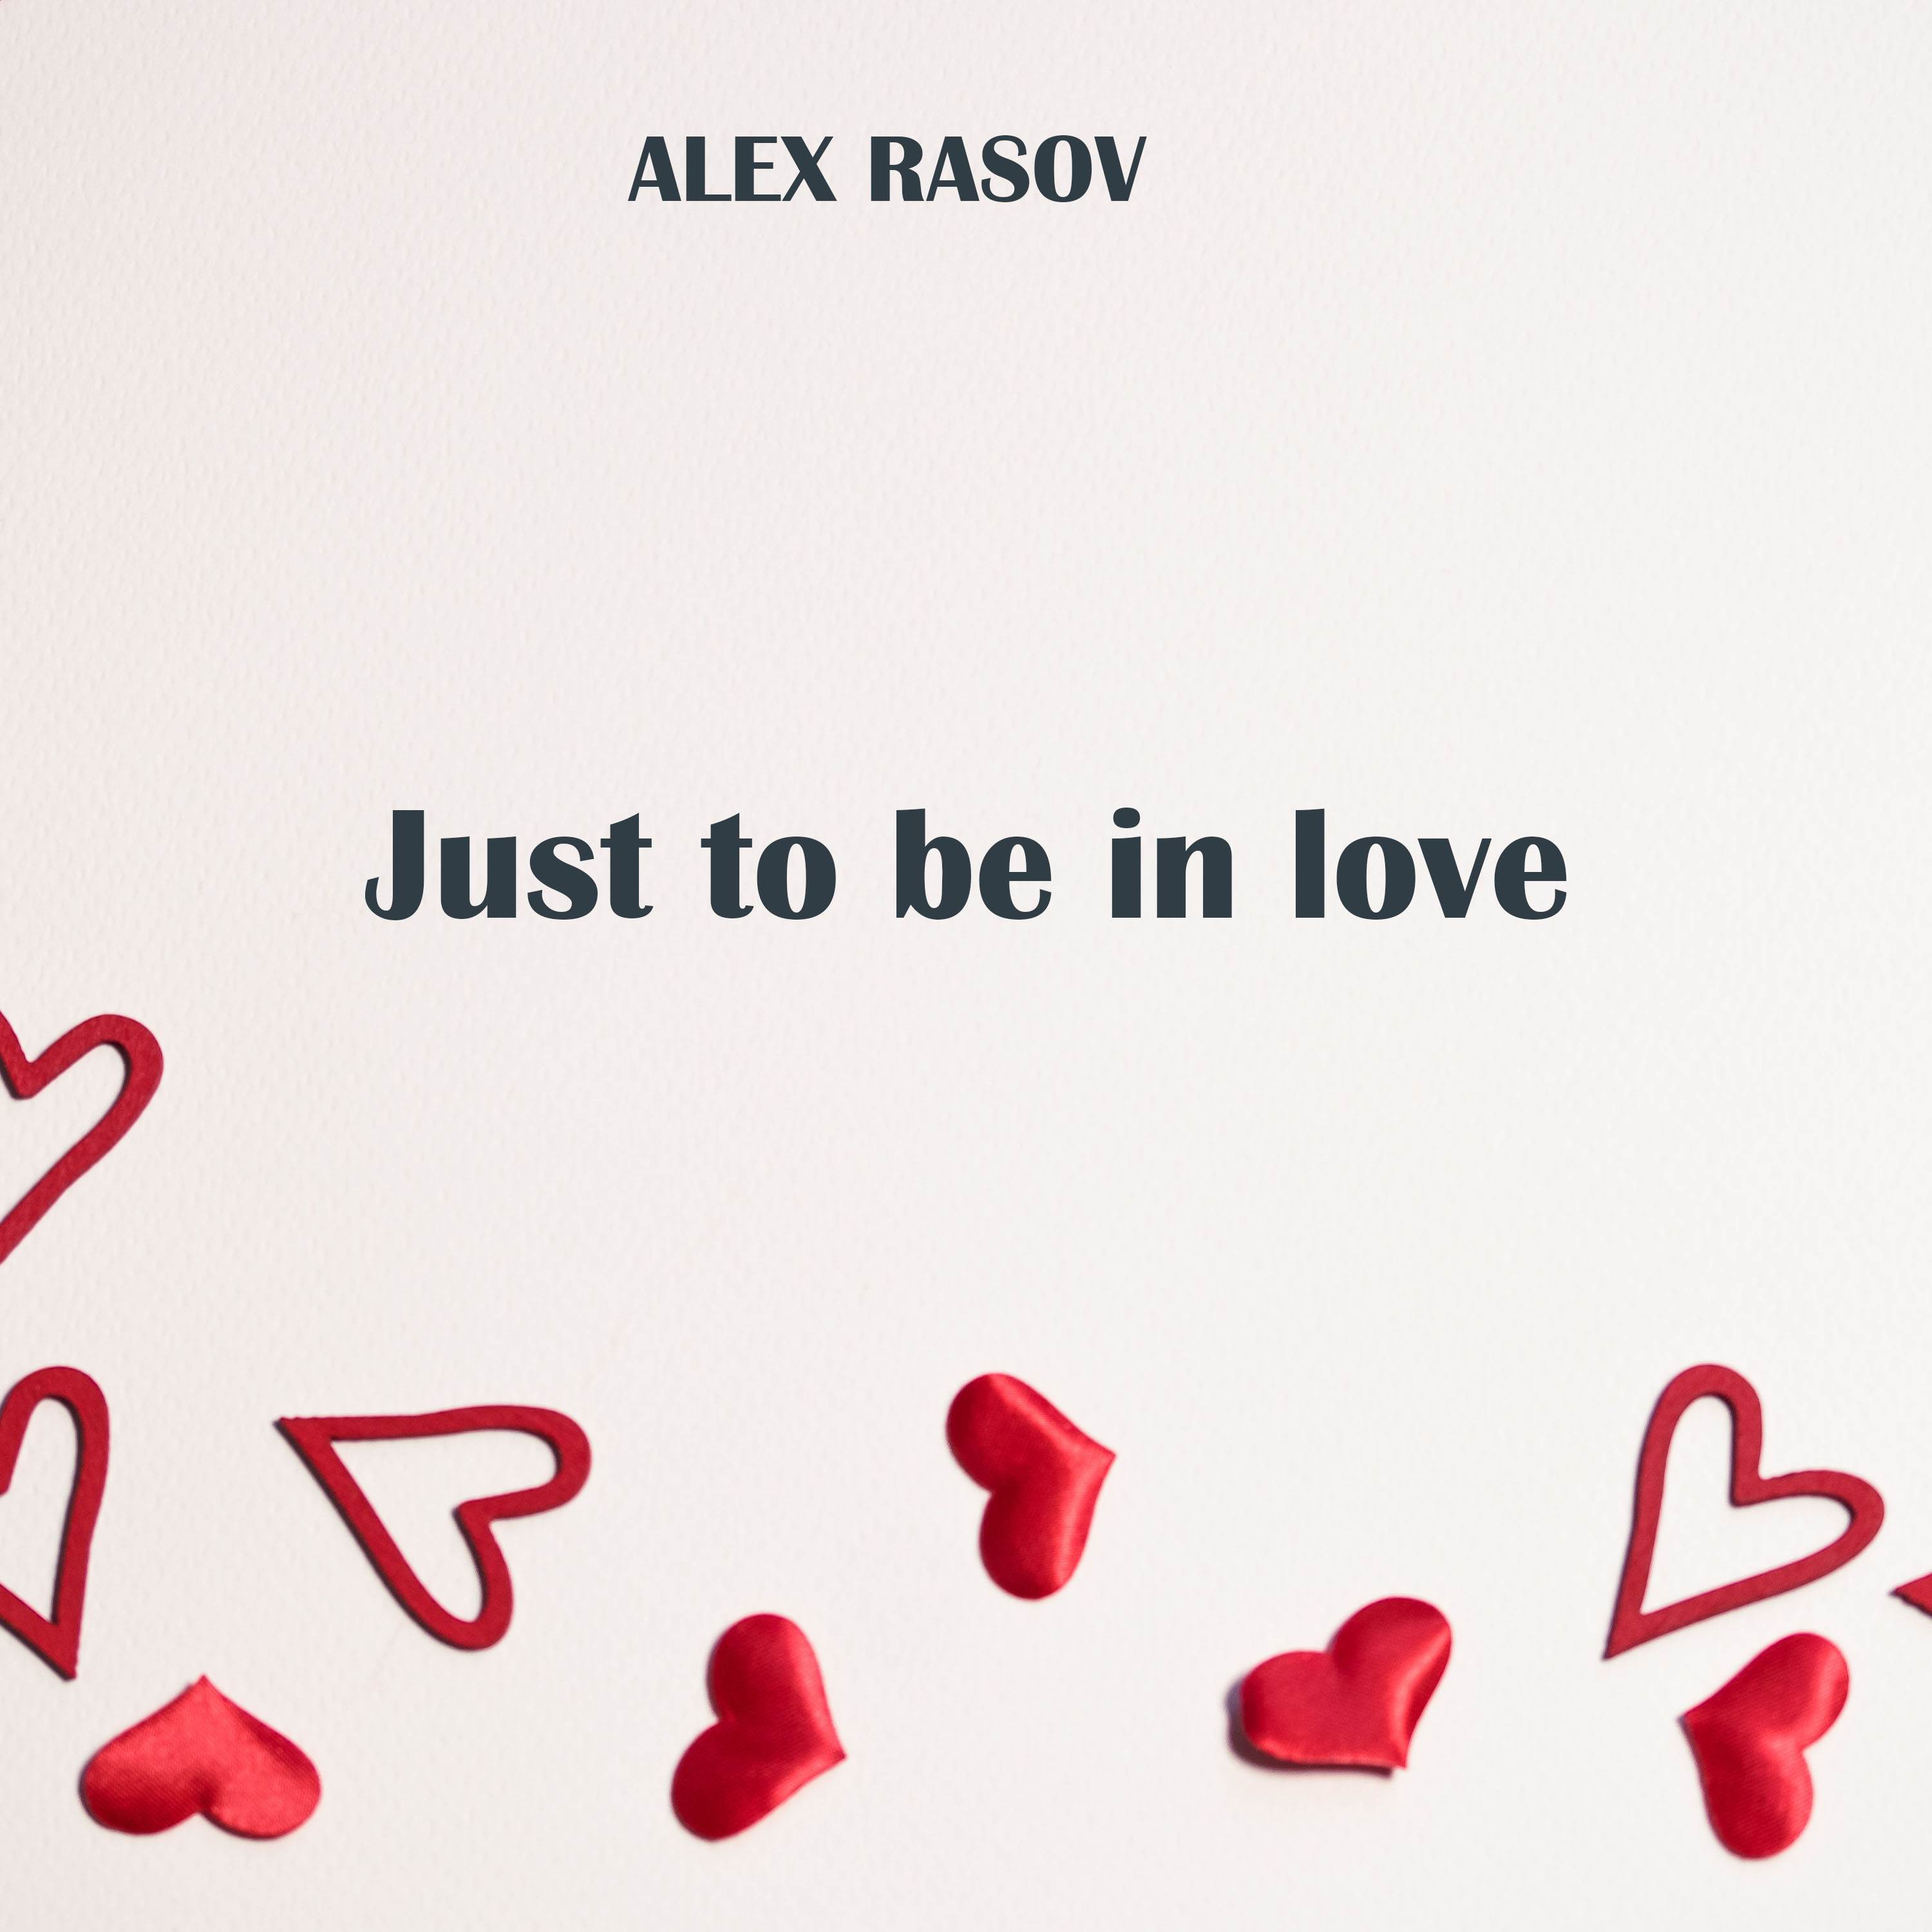 Алекс разов. Alex Rasov just be in Love. Alex Rasov just to be. Алекс расов just to be in Love. Love in Love.